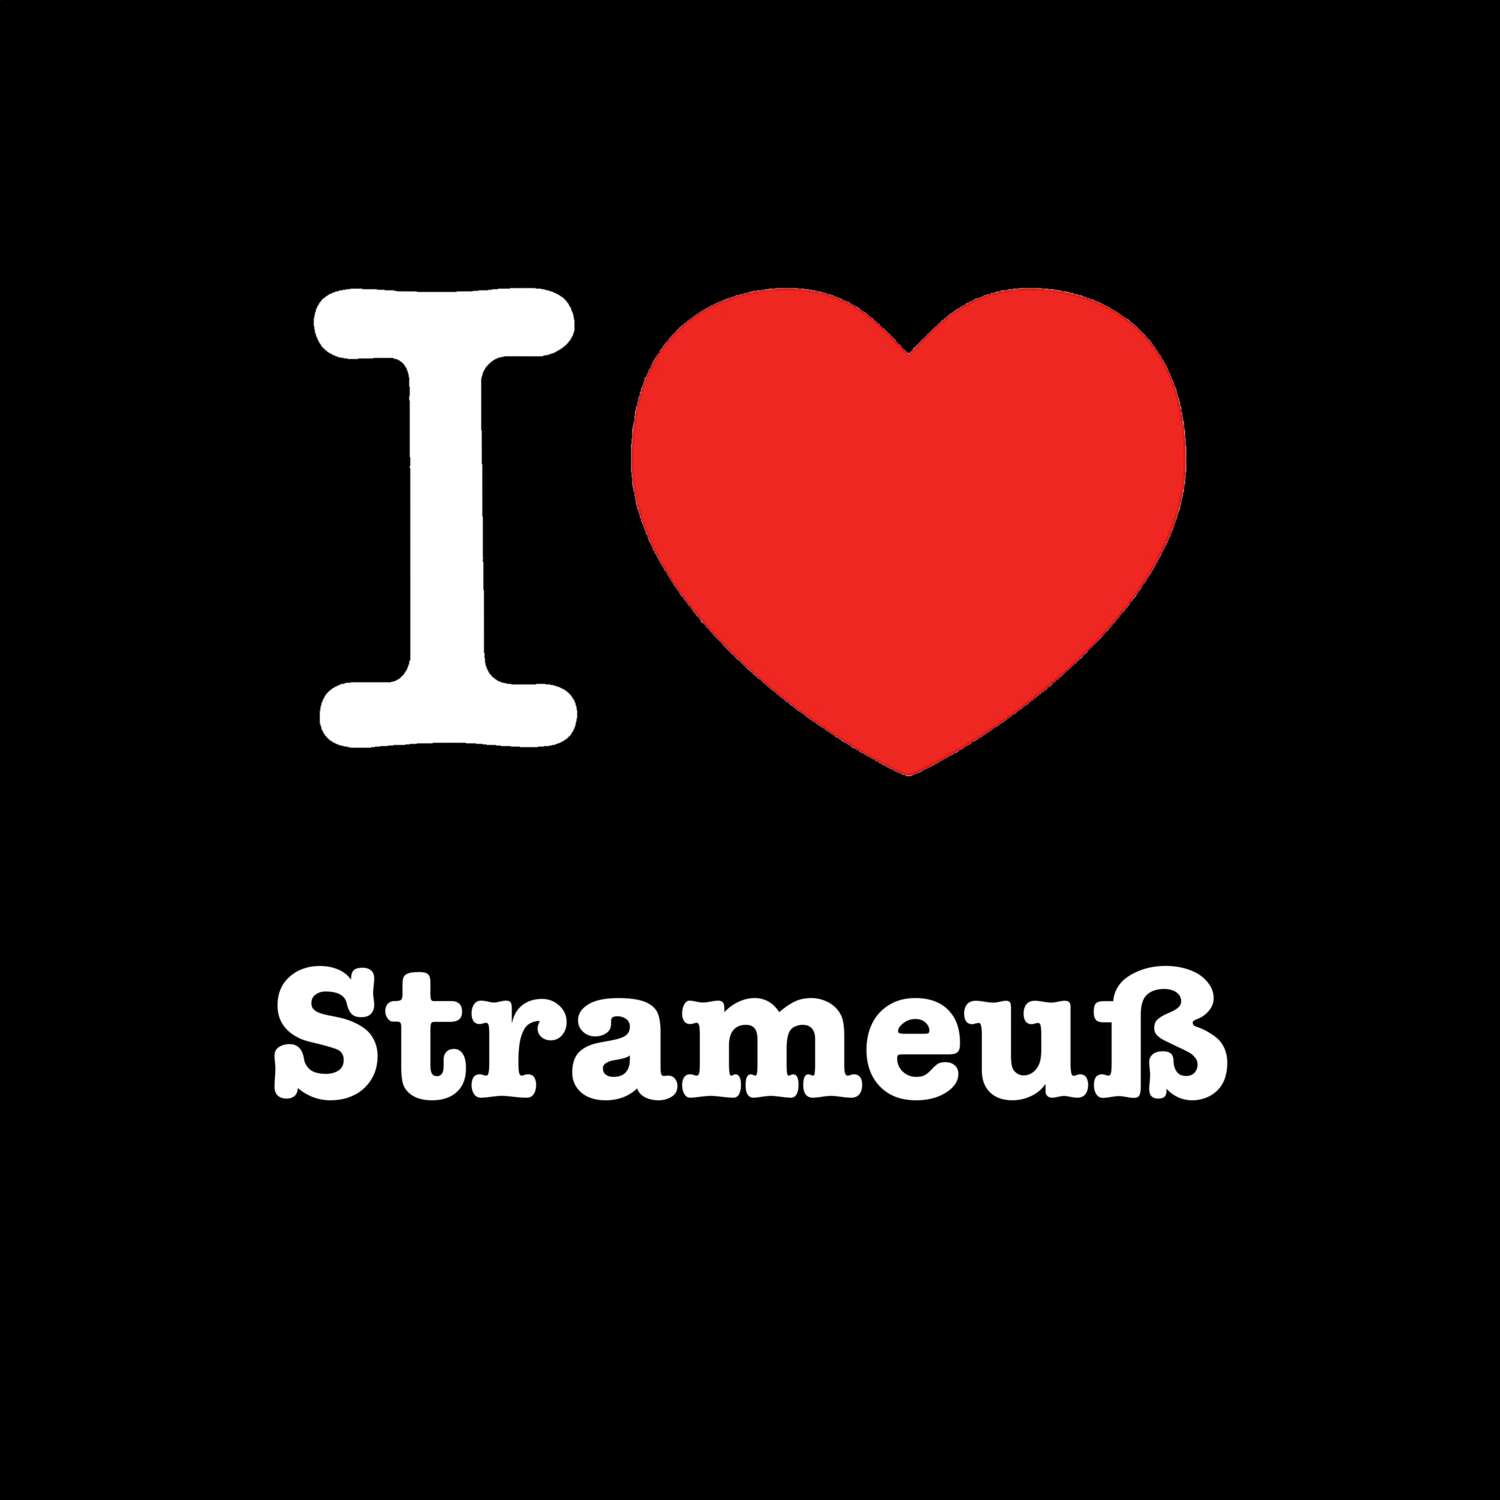 Strameuß T-Shirt »I love«